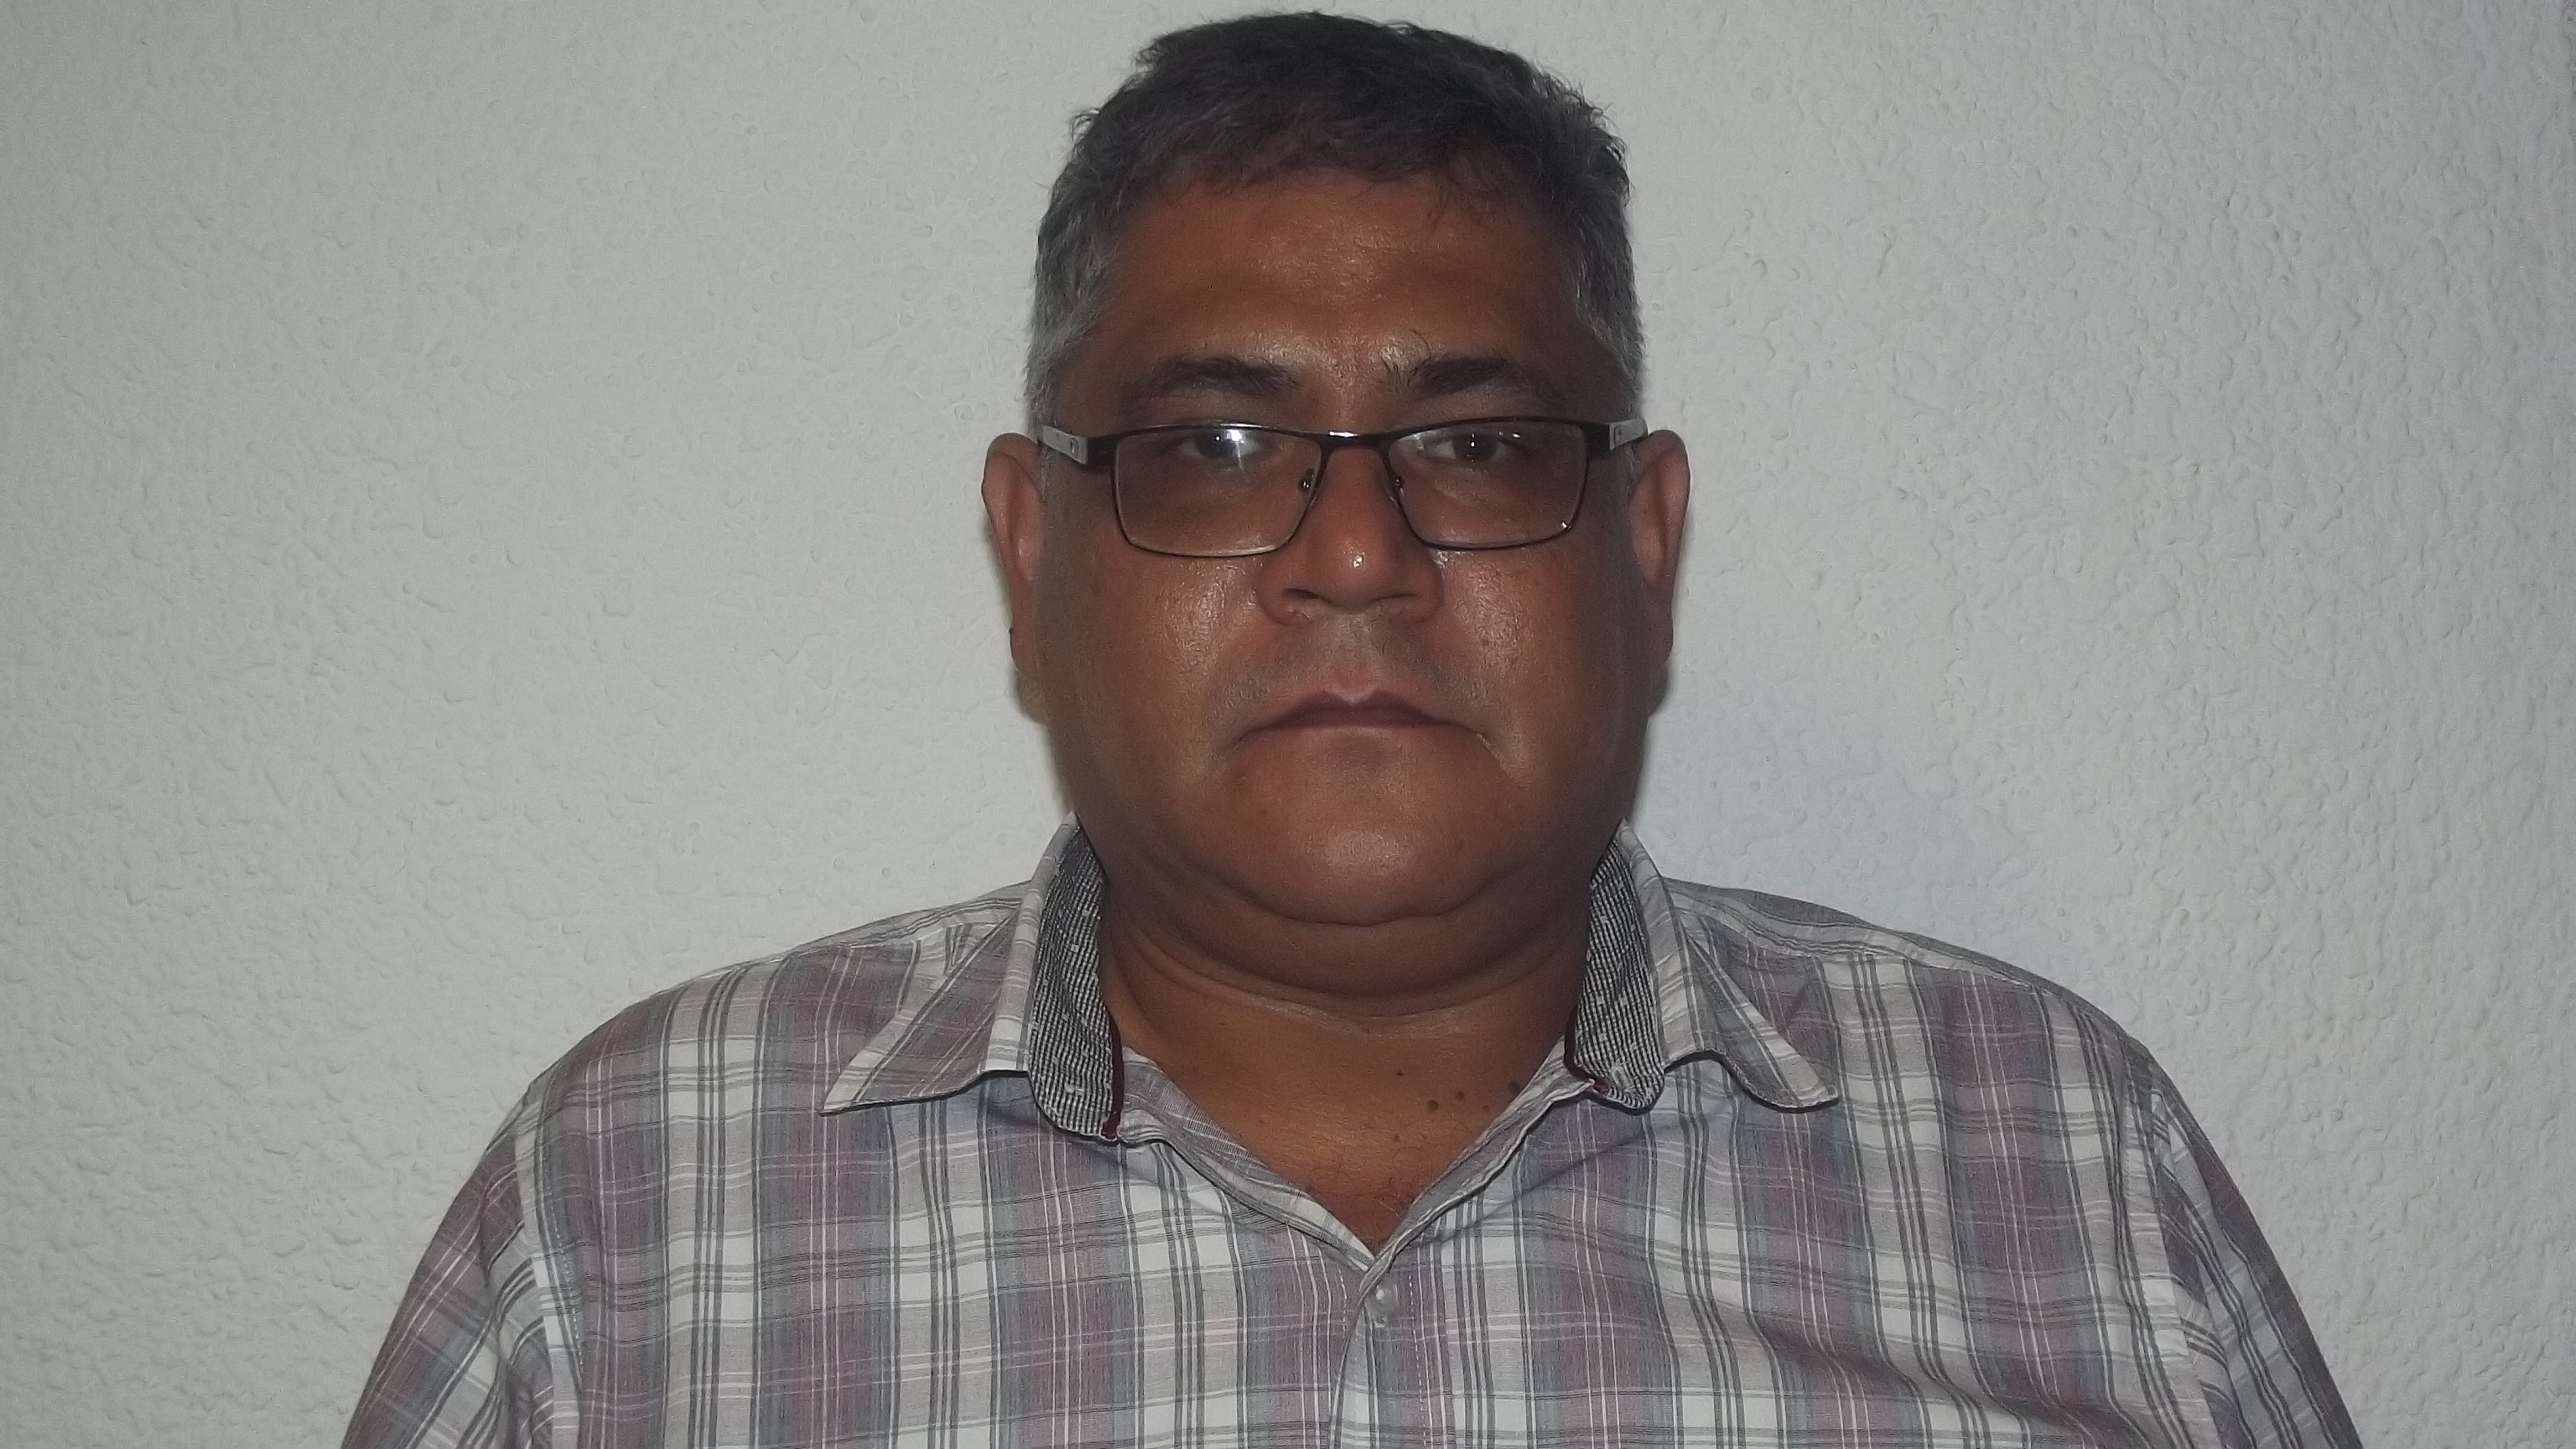 Lic. Luis Humbero Ruiz Silva
Subdelegado Administrativo